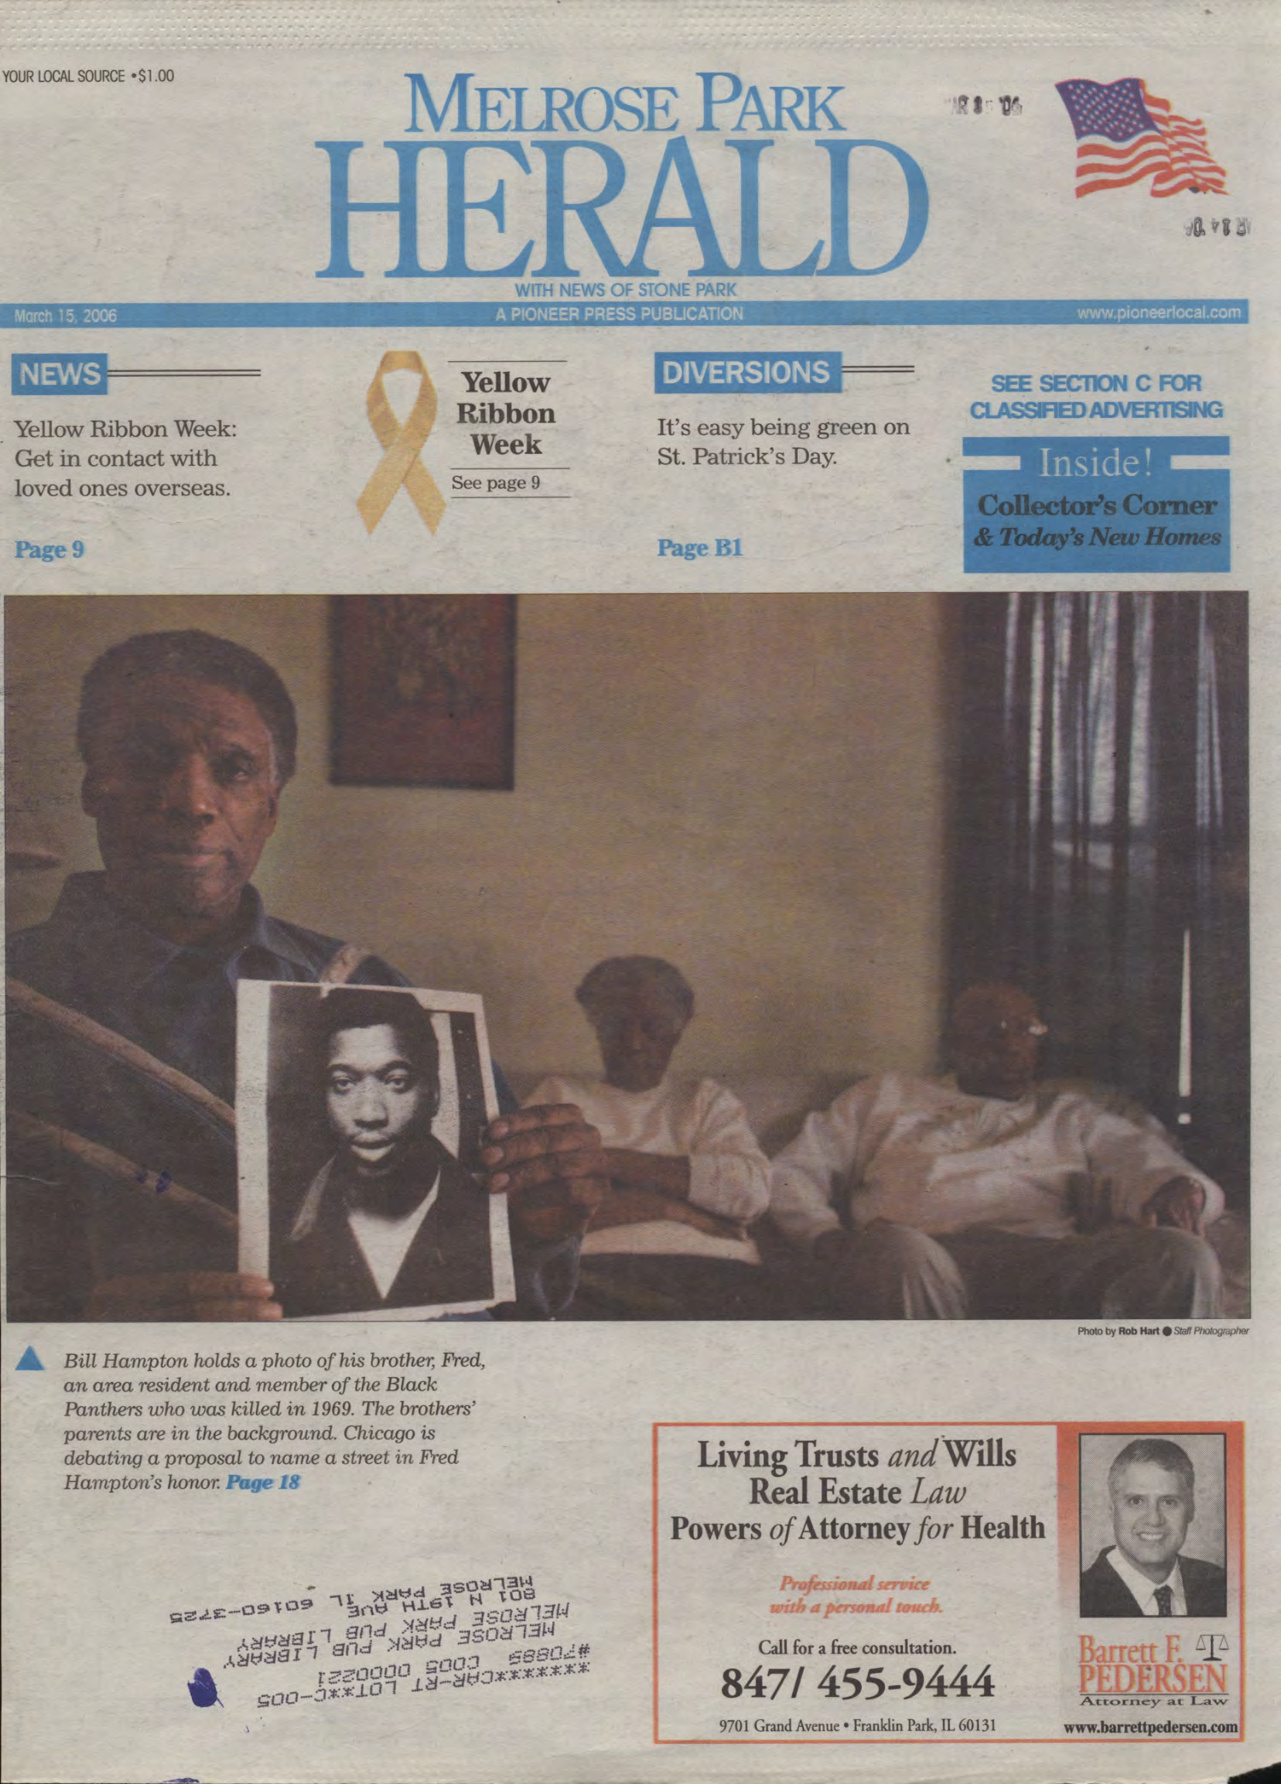 The Herald – 20060315